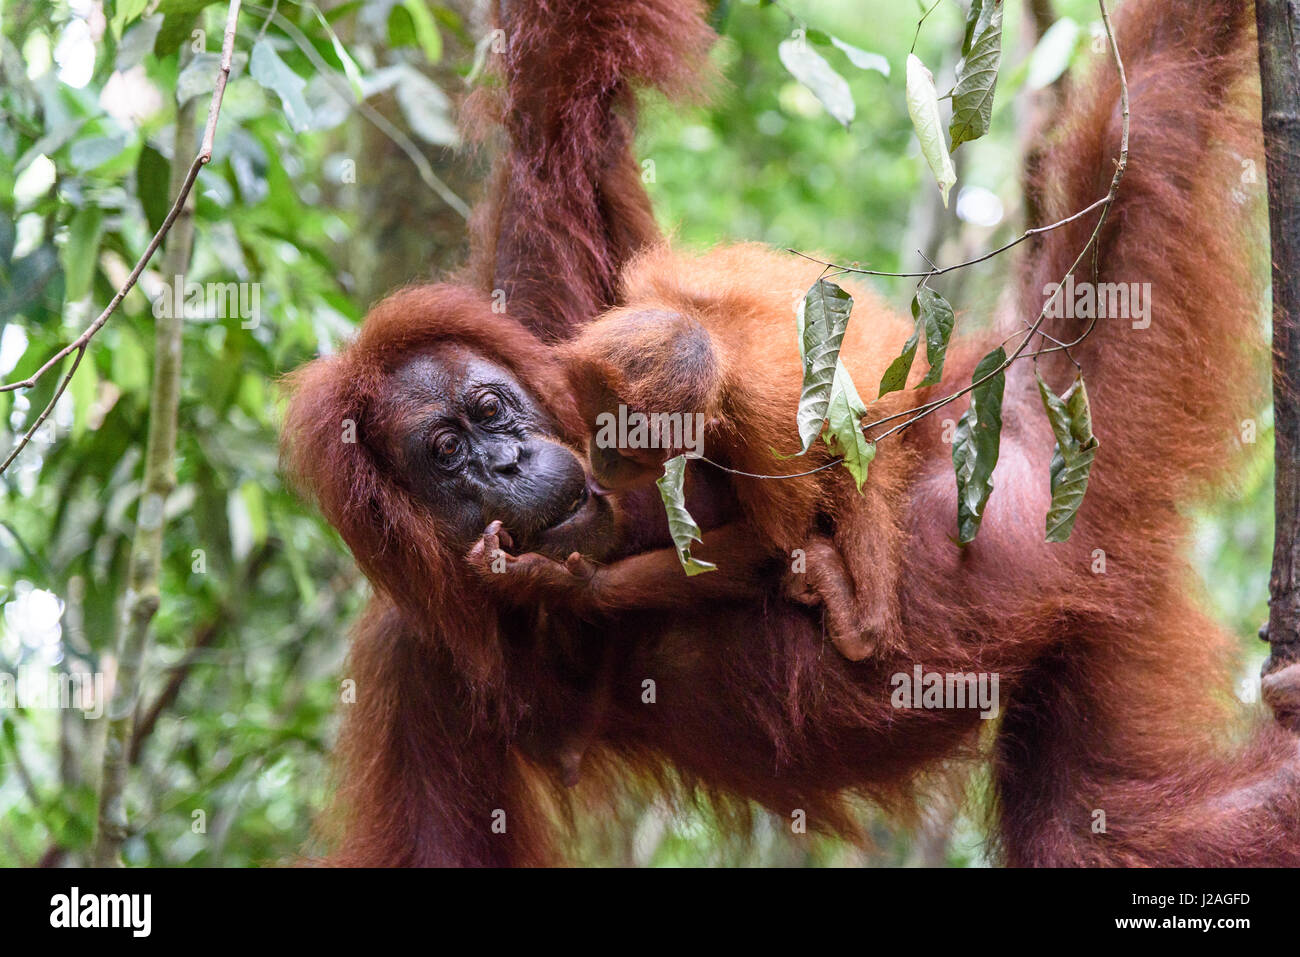 Indonesia, Aceh, Gayo Lues Regency, Gunung-Leuser National Park, Sumatra, Orangutan family in the wild Stock Photo